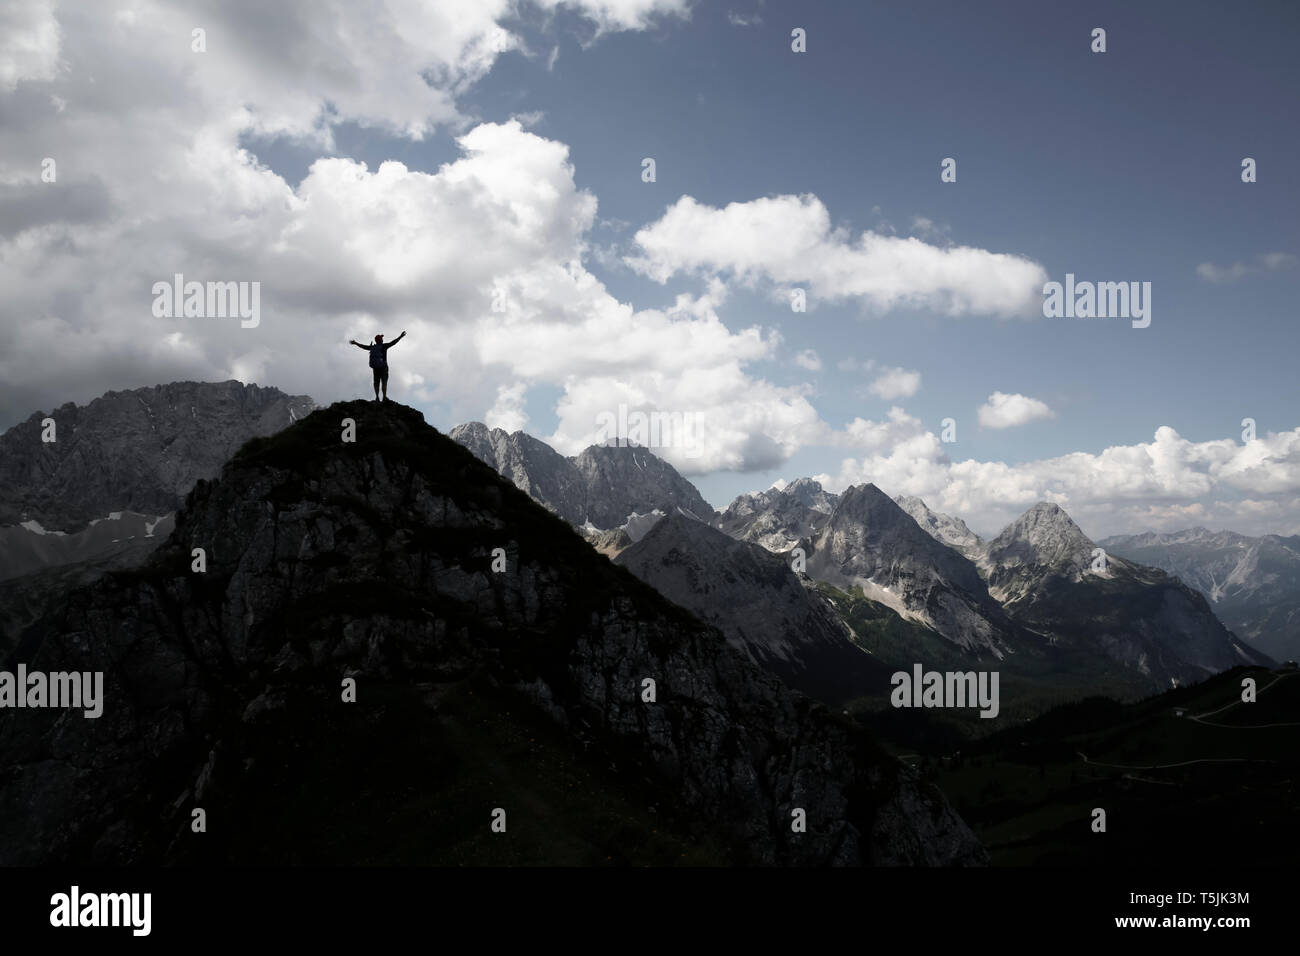 Austria, Tyrol, silhouette of man cheering on mountain peak Stock Photo